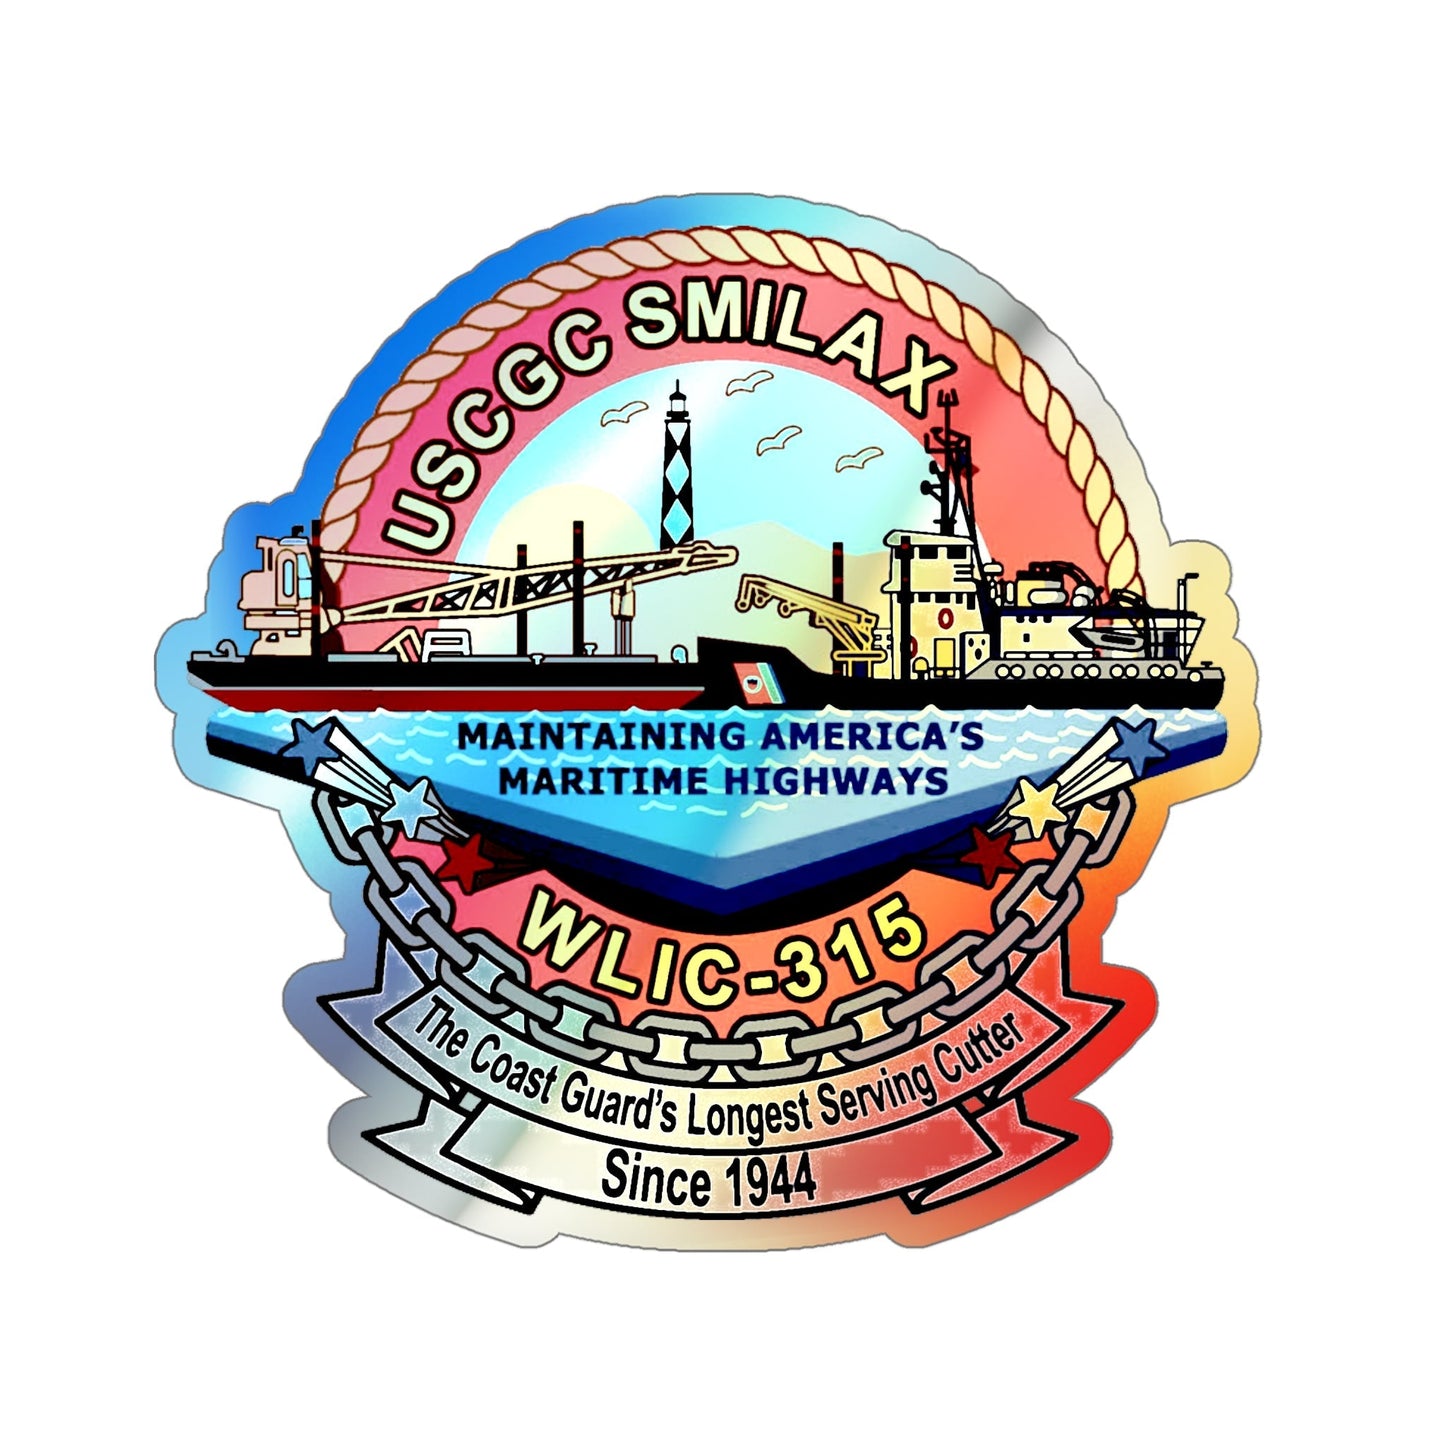 CGC Smilax WLIC 315 (U.S. Coast Guard) Holographic STICKER Die-Cut Vinyl Decal-5 Inch-The Sticker Space